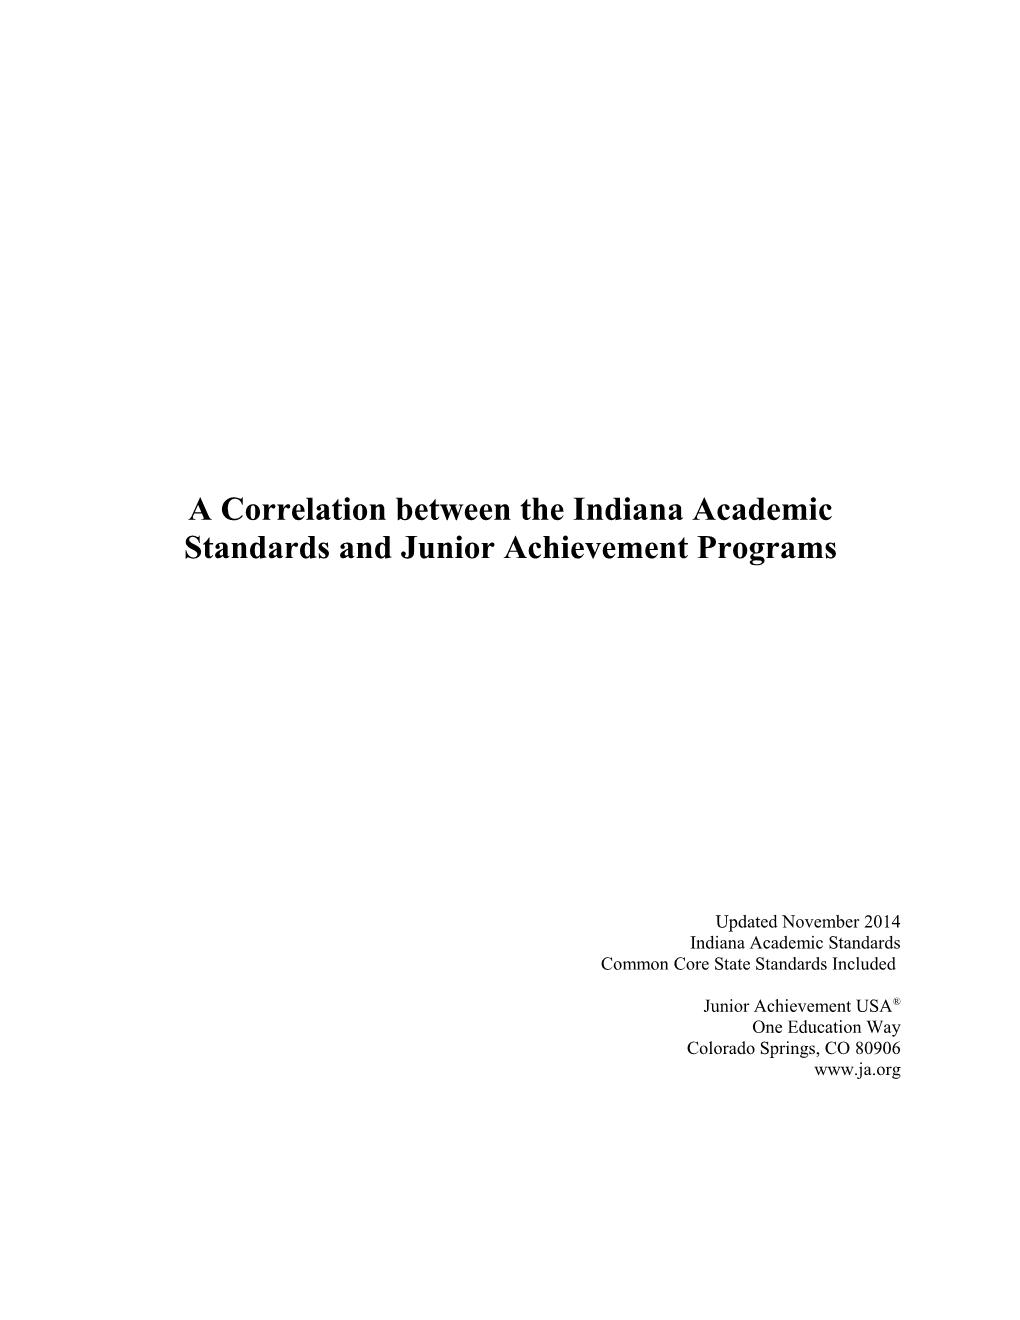 A Correlation Between the Indiana Academicstandardsand Junior Achievement Programs